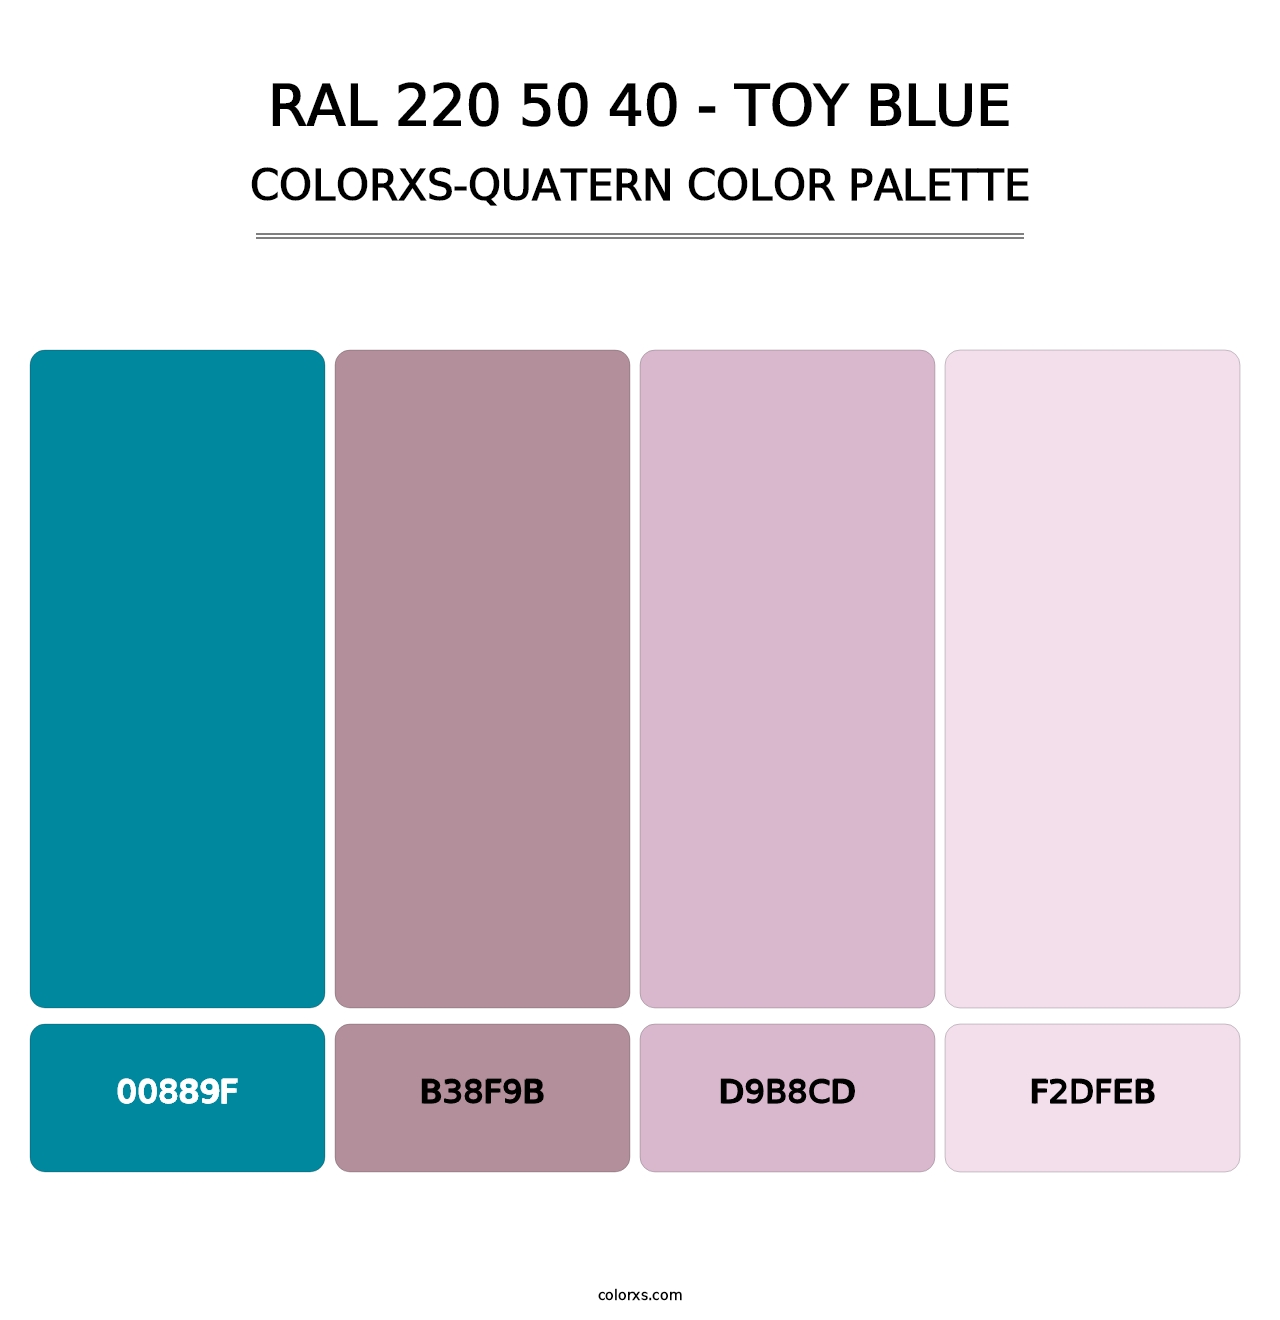 RAL 220 50 40 - Toy Blue - Colorxs Quatern Palette